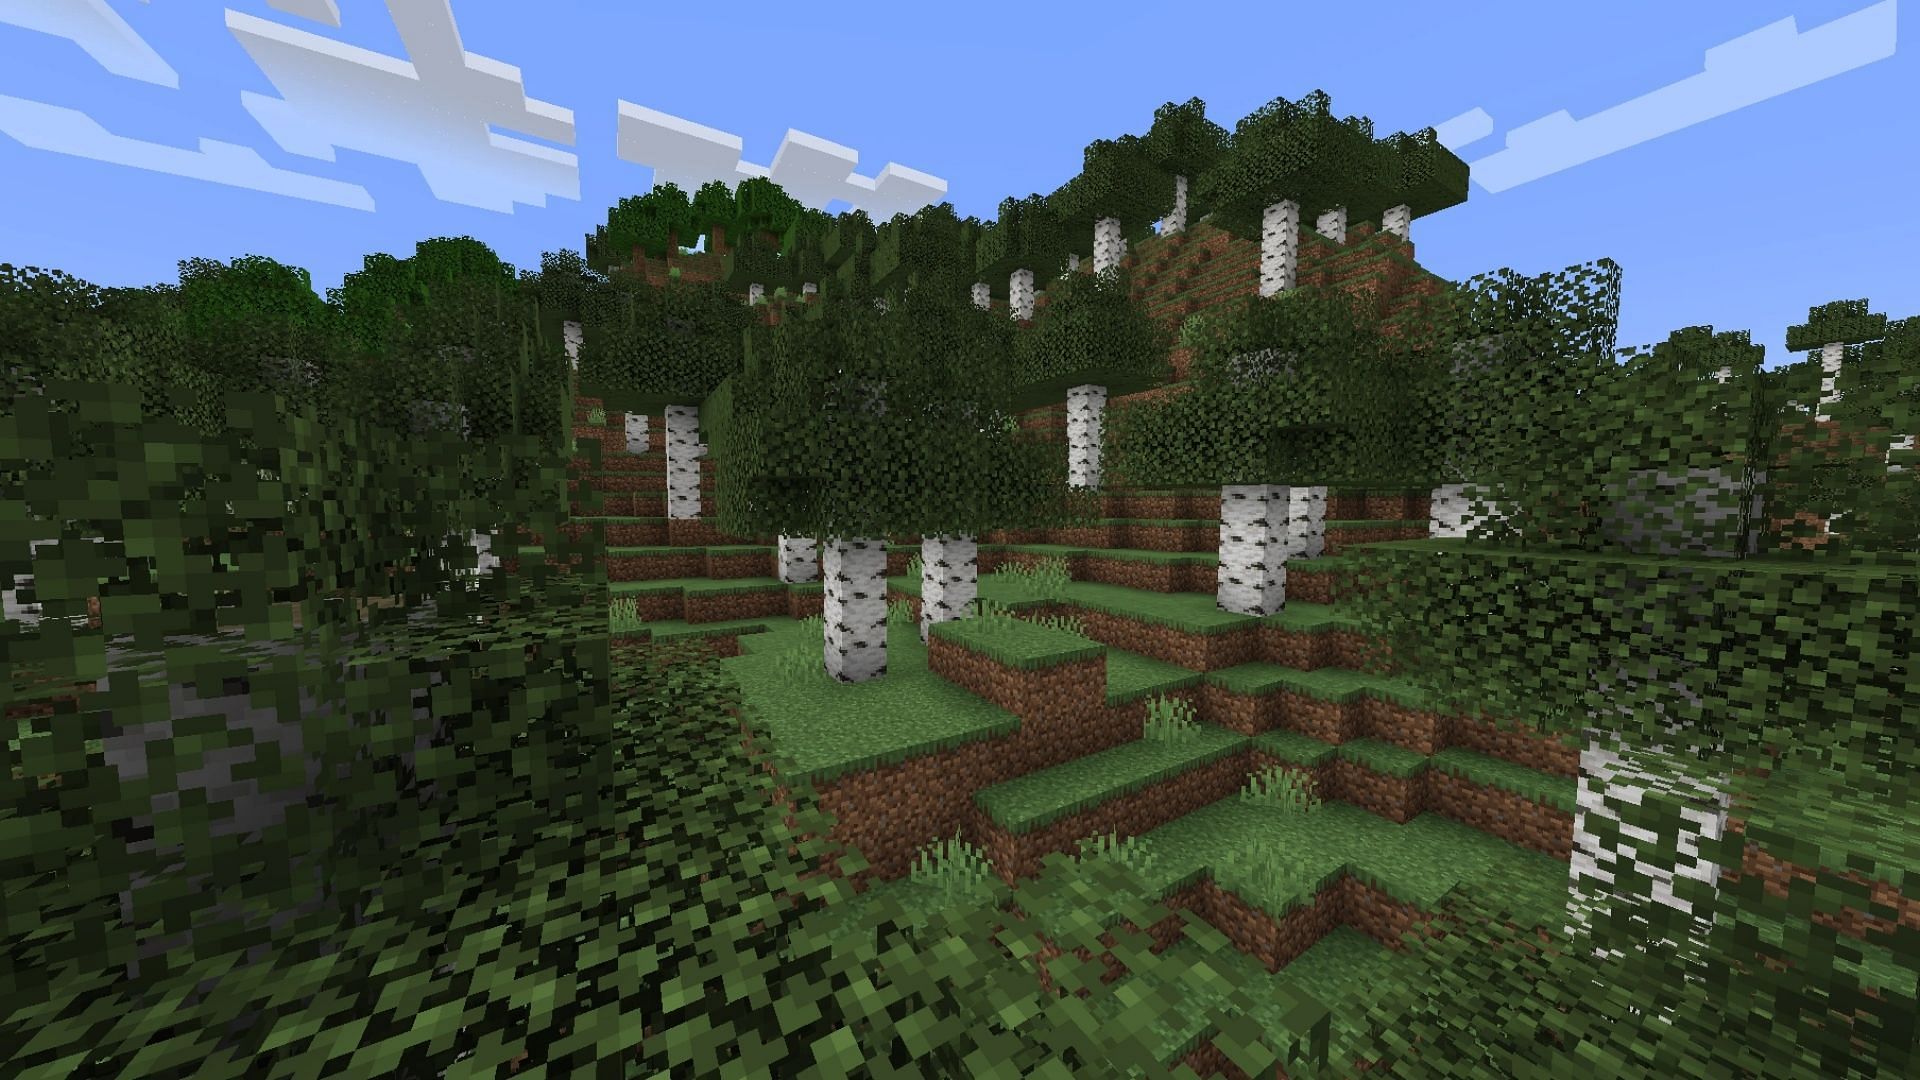 Birch Forest was about to get a hotfix in update 1.19 (Image via Minecraft Wiki)